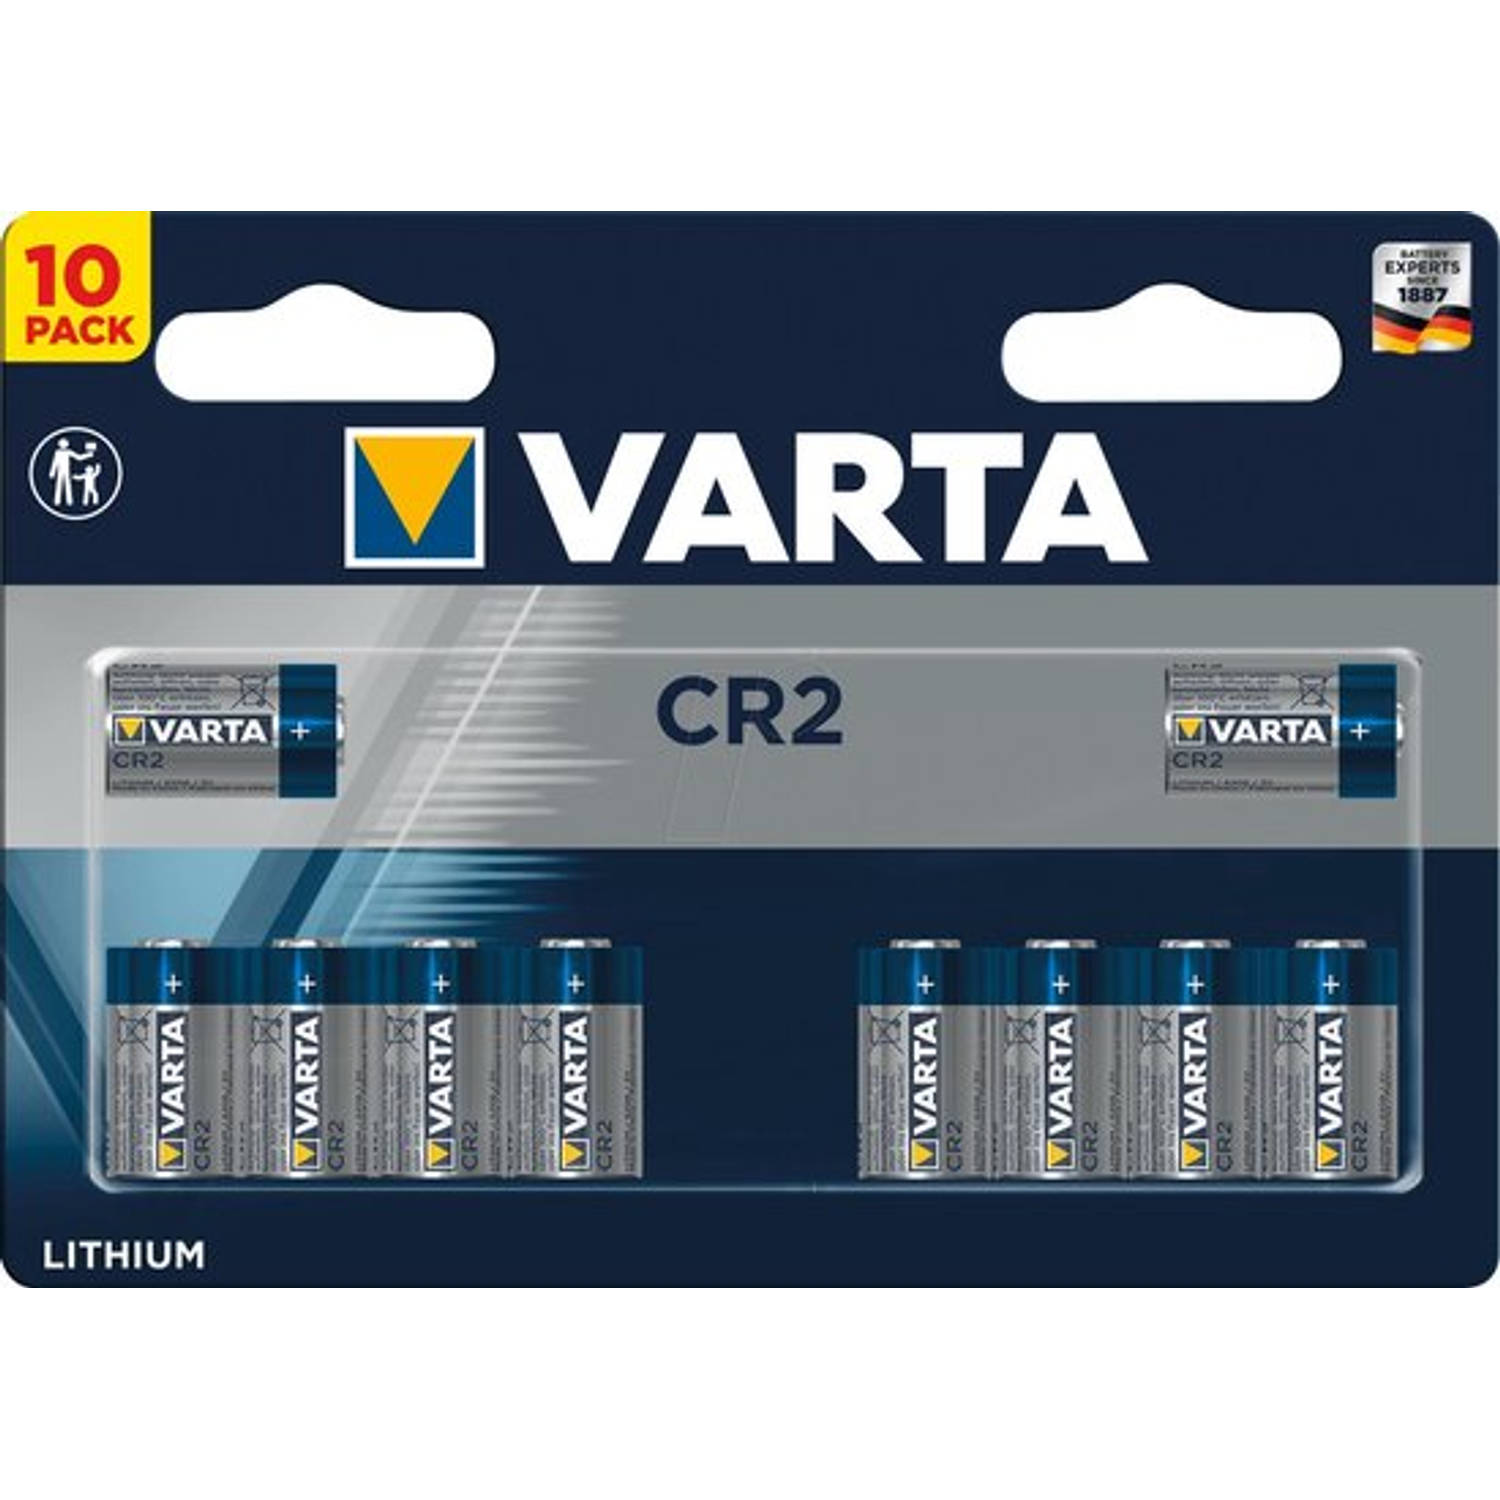 Varta Electronics CR2 CR2 Fotobatterij Lithium 880 mAh 3 V 10 stuks